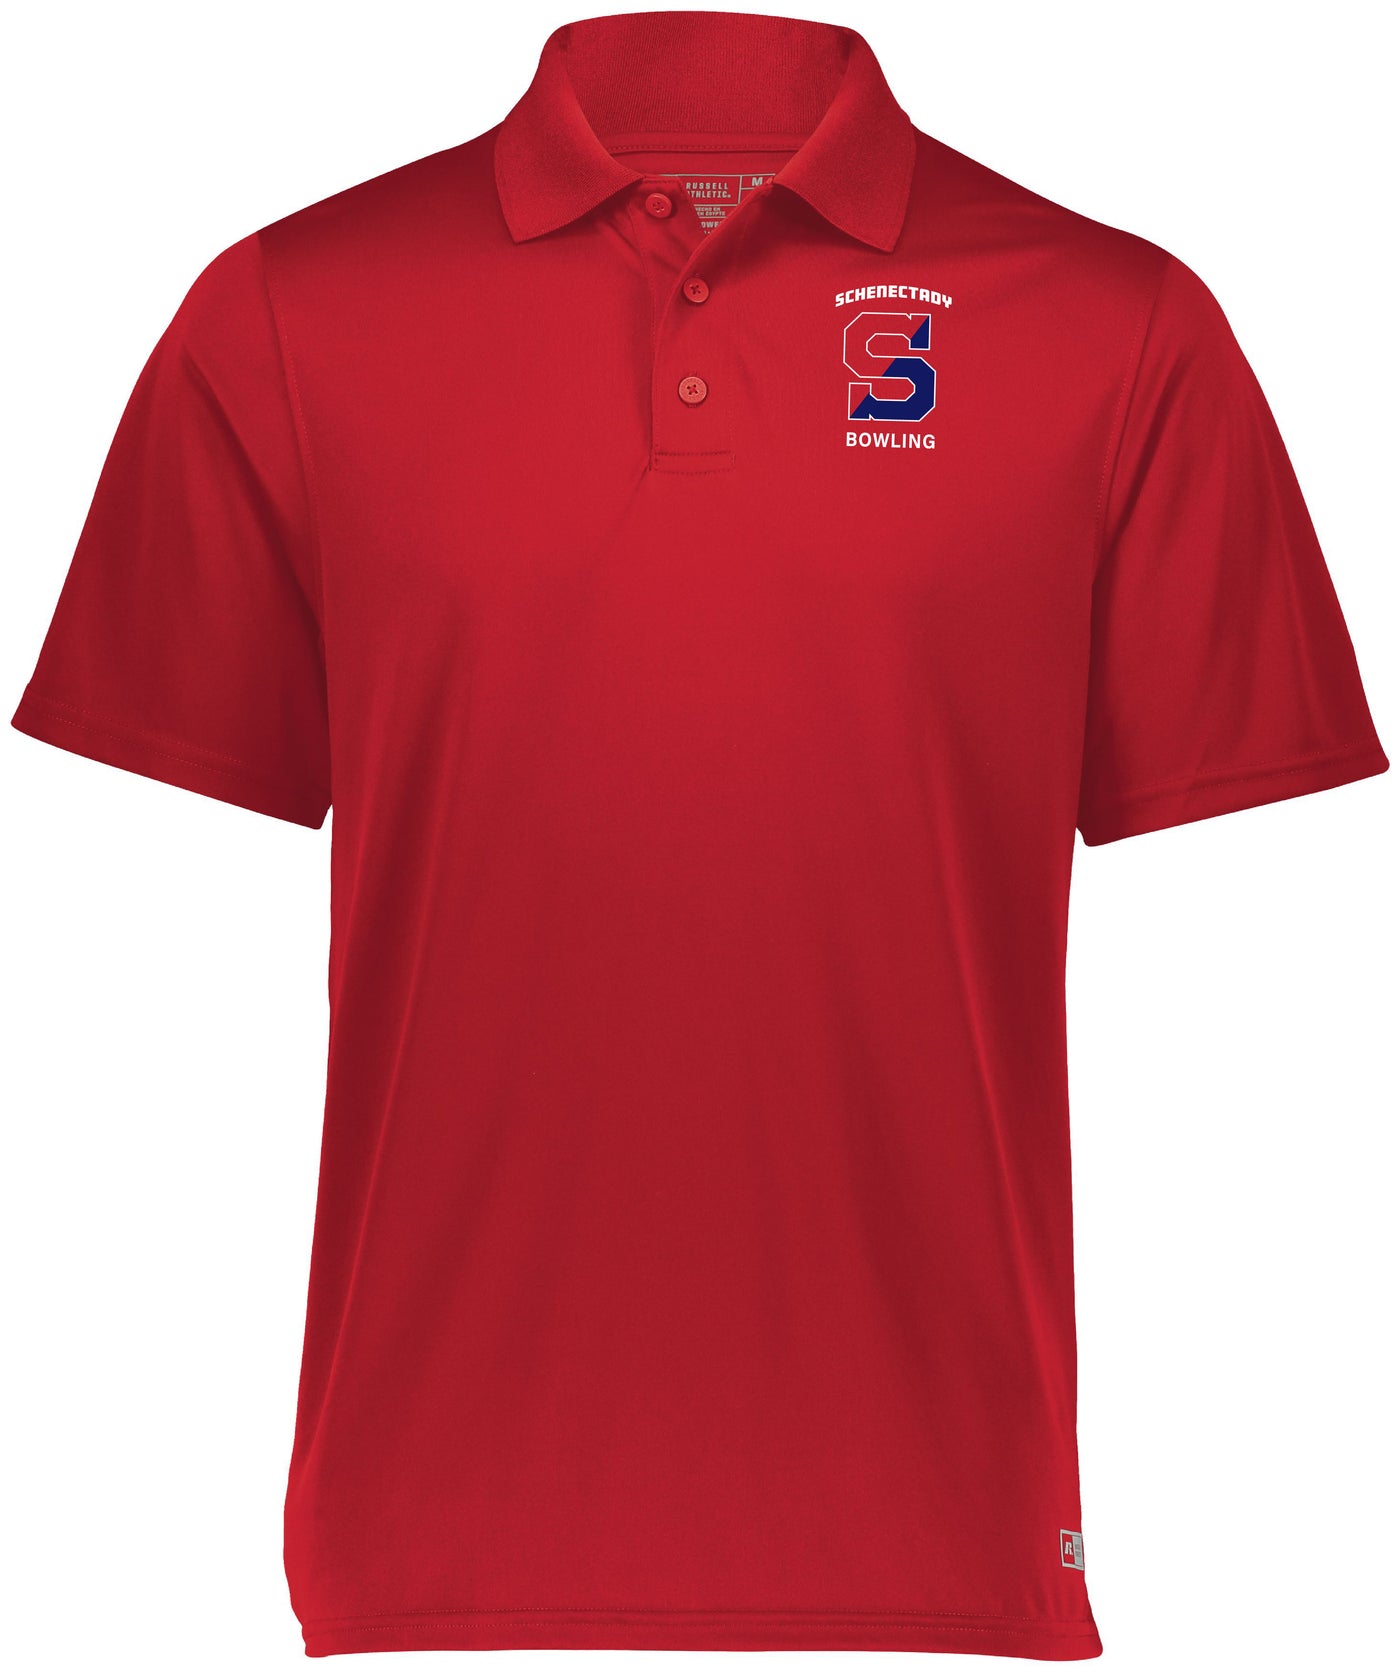 Schenectady High School Essential Men's Bowling Shirt